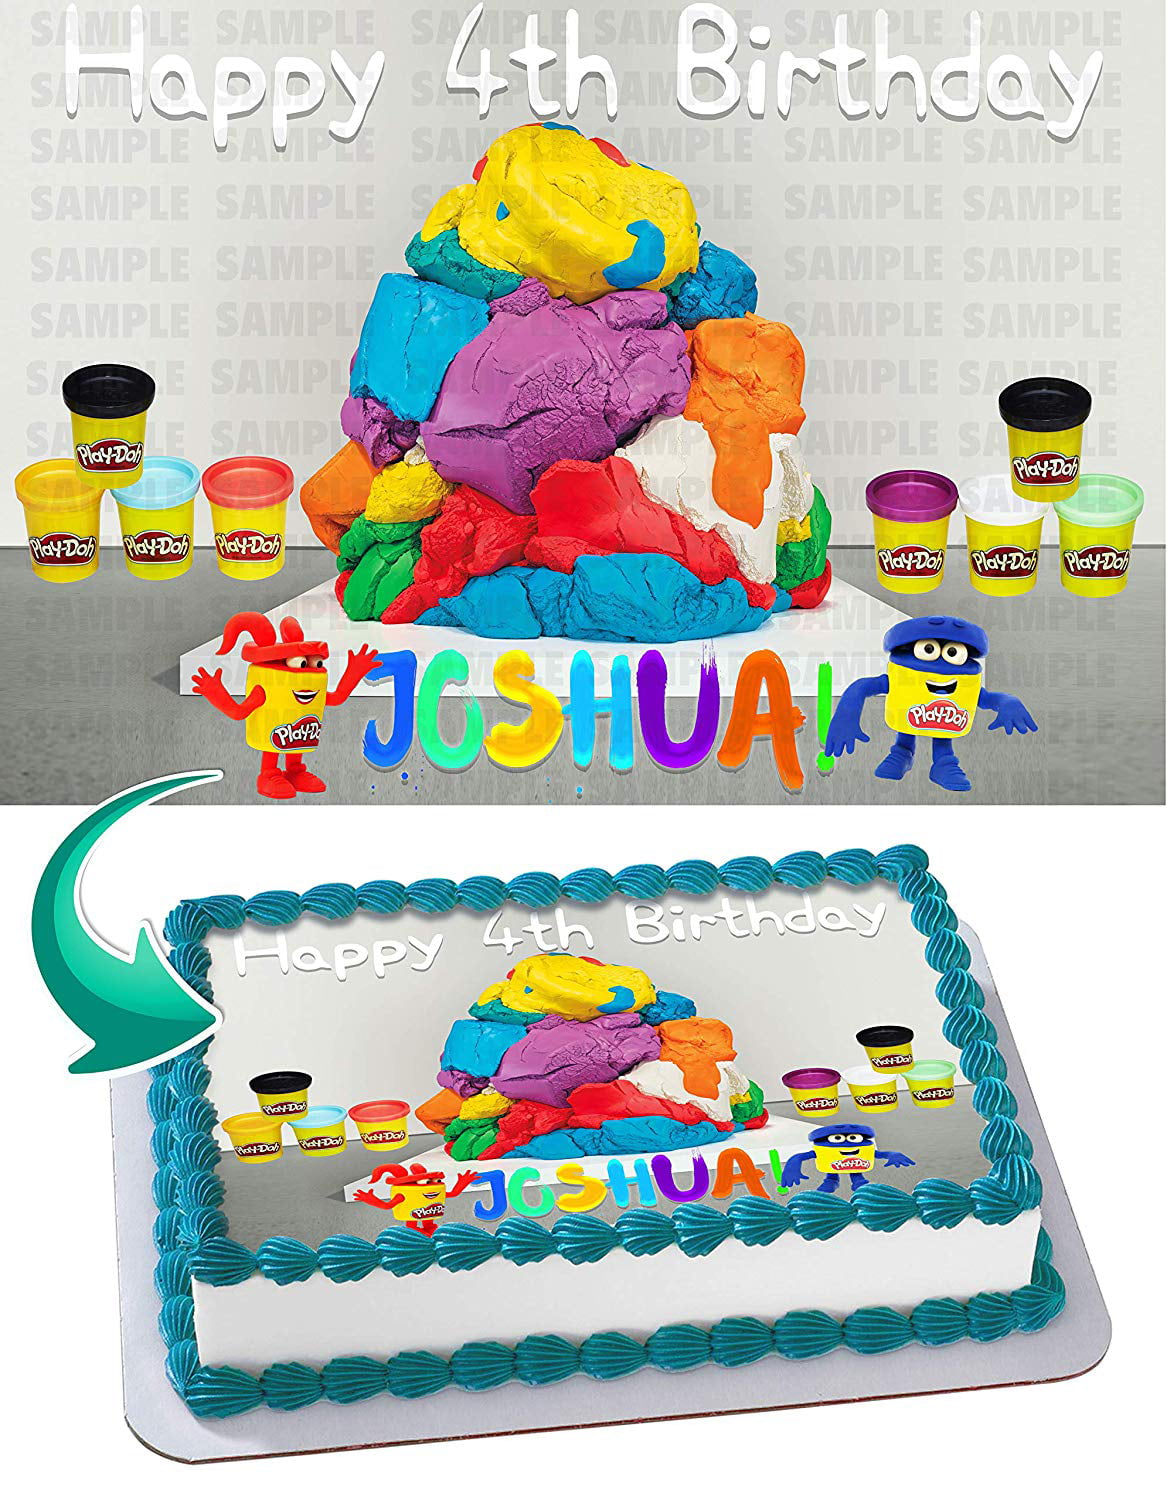 Play-Doh Birthday Cake - Adrienne & Co. Bakery | Novelty birthday cakes,  Play doh, Themed birthday cakes